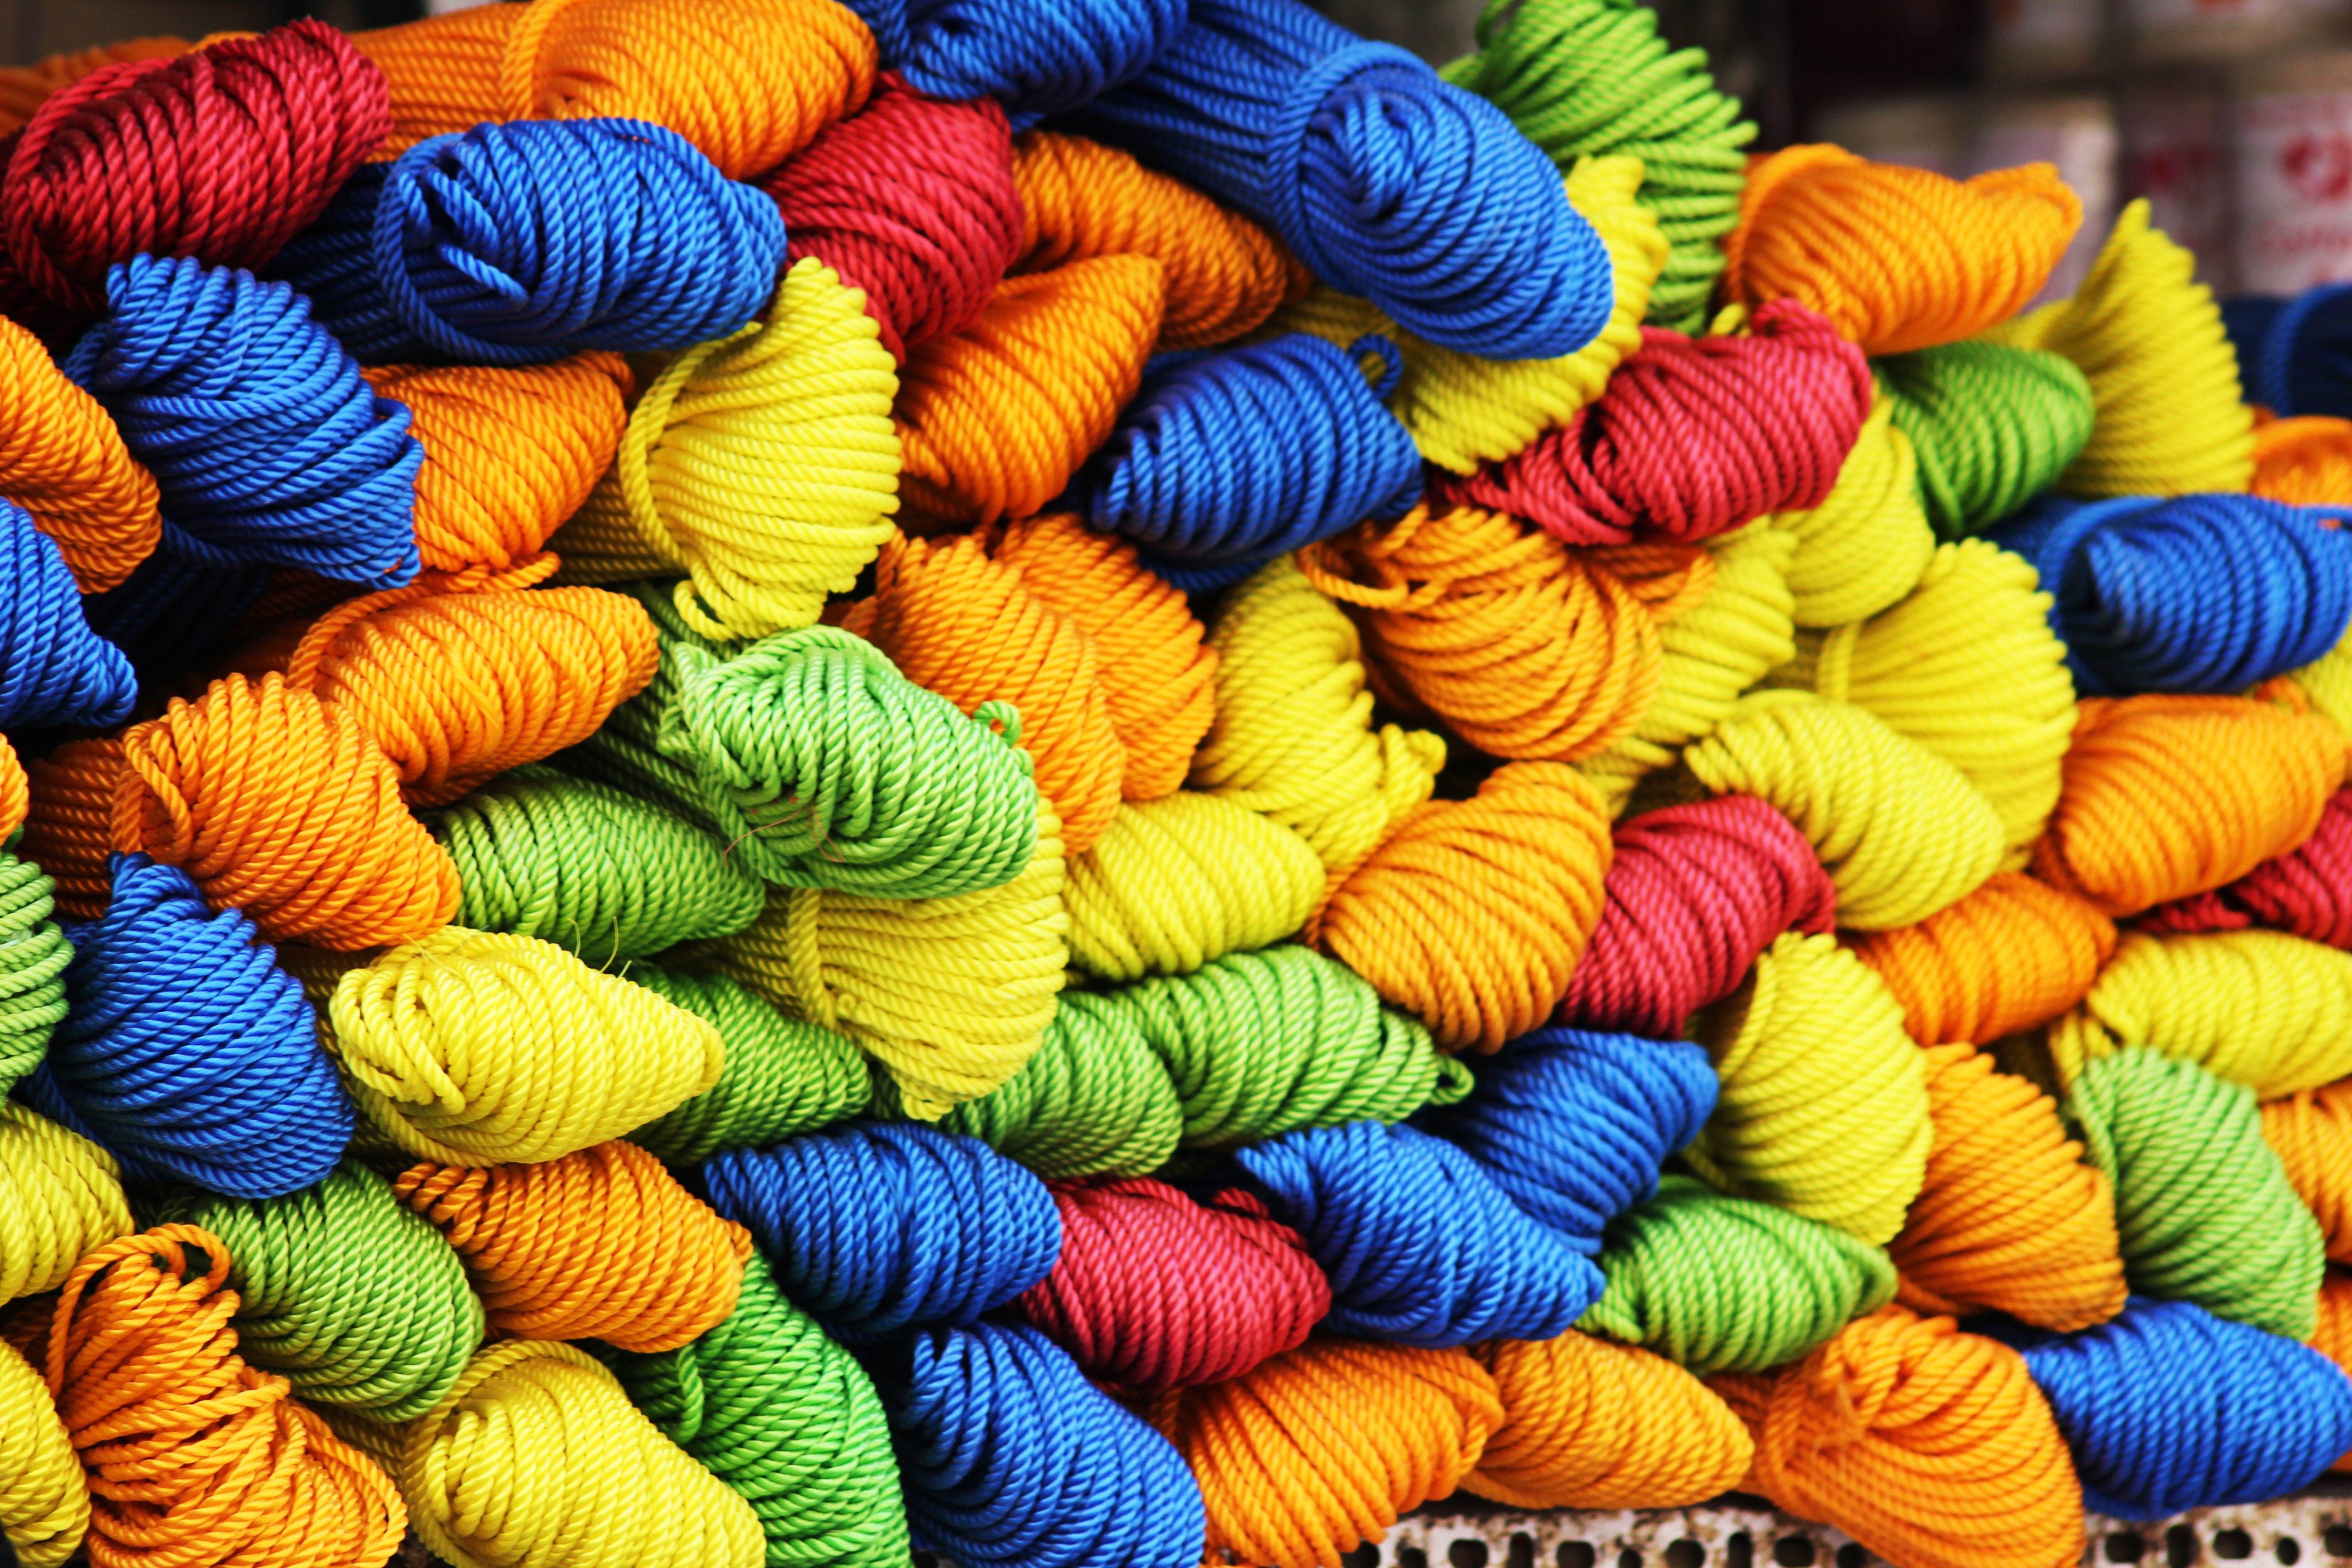 miscellanea, miscellaneous, multicolored, motley, threads, thread, yarn